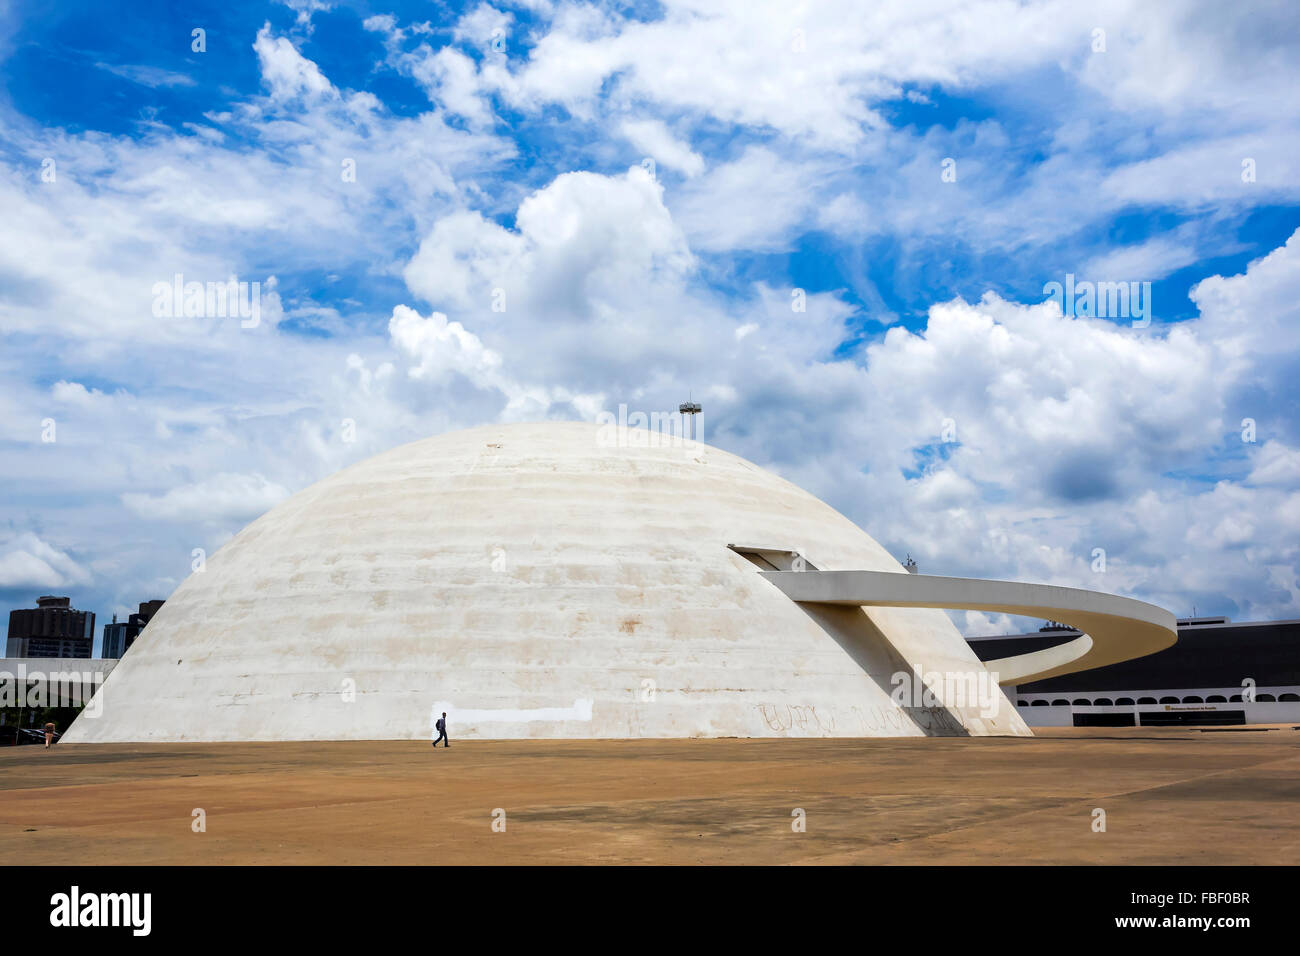 The National Museum in Brasilia, capital of Brazil, designed by famous Brazilian architect Oscar Niemeyer. Stock Photo